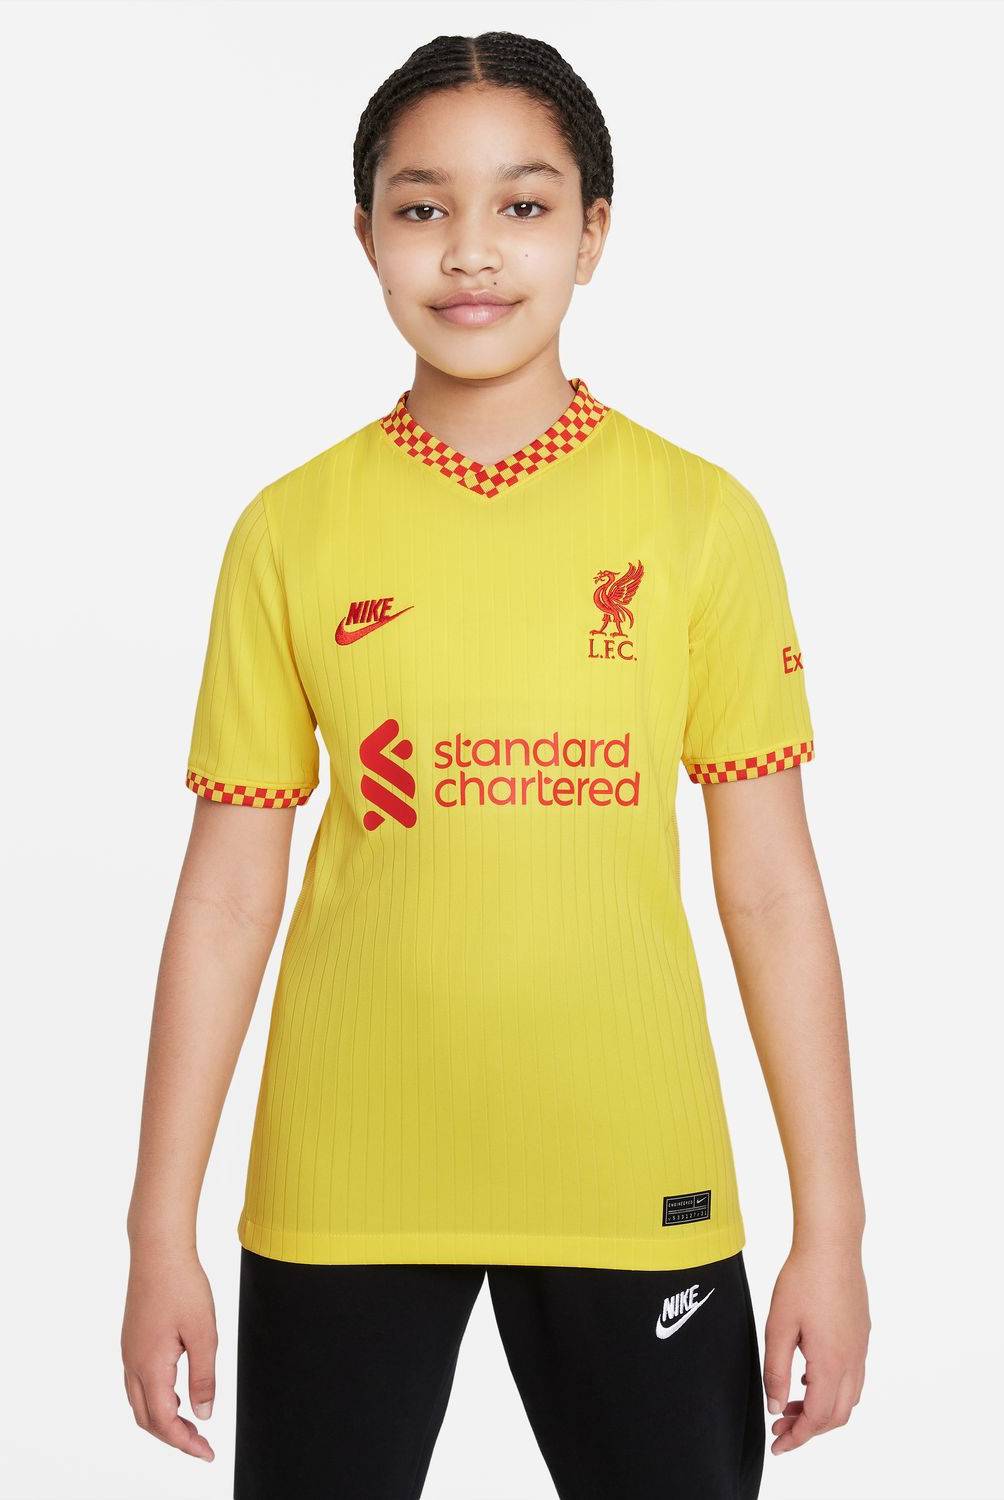 NIKE - Nike Camiseta De Fútbol Liverpool Niño